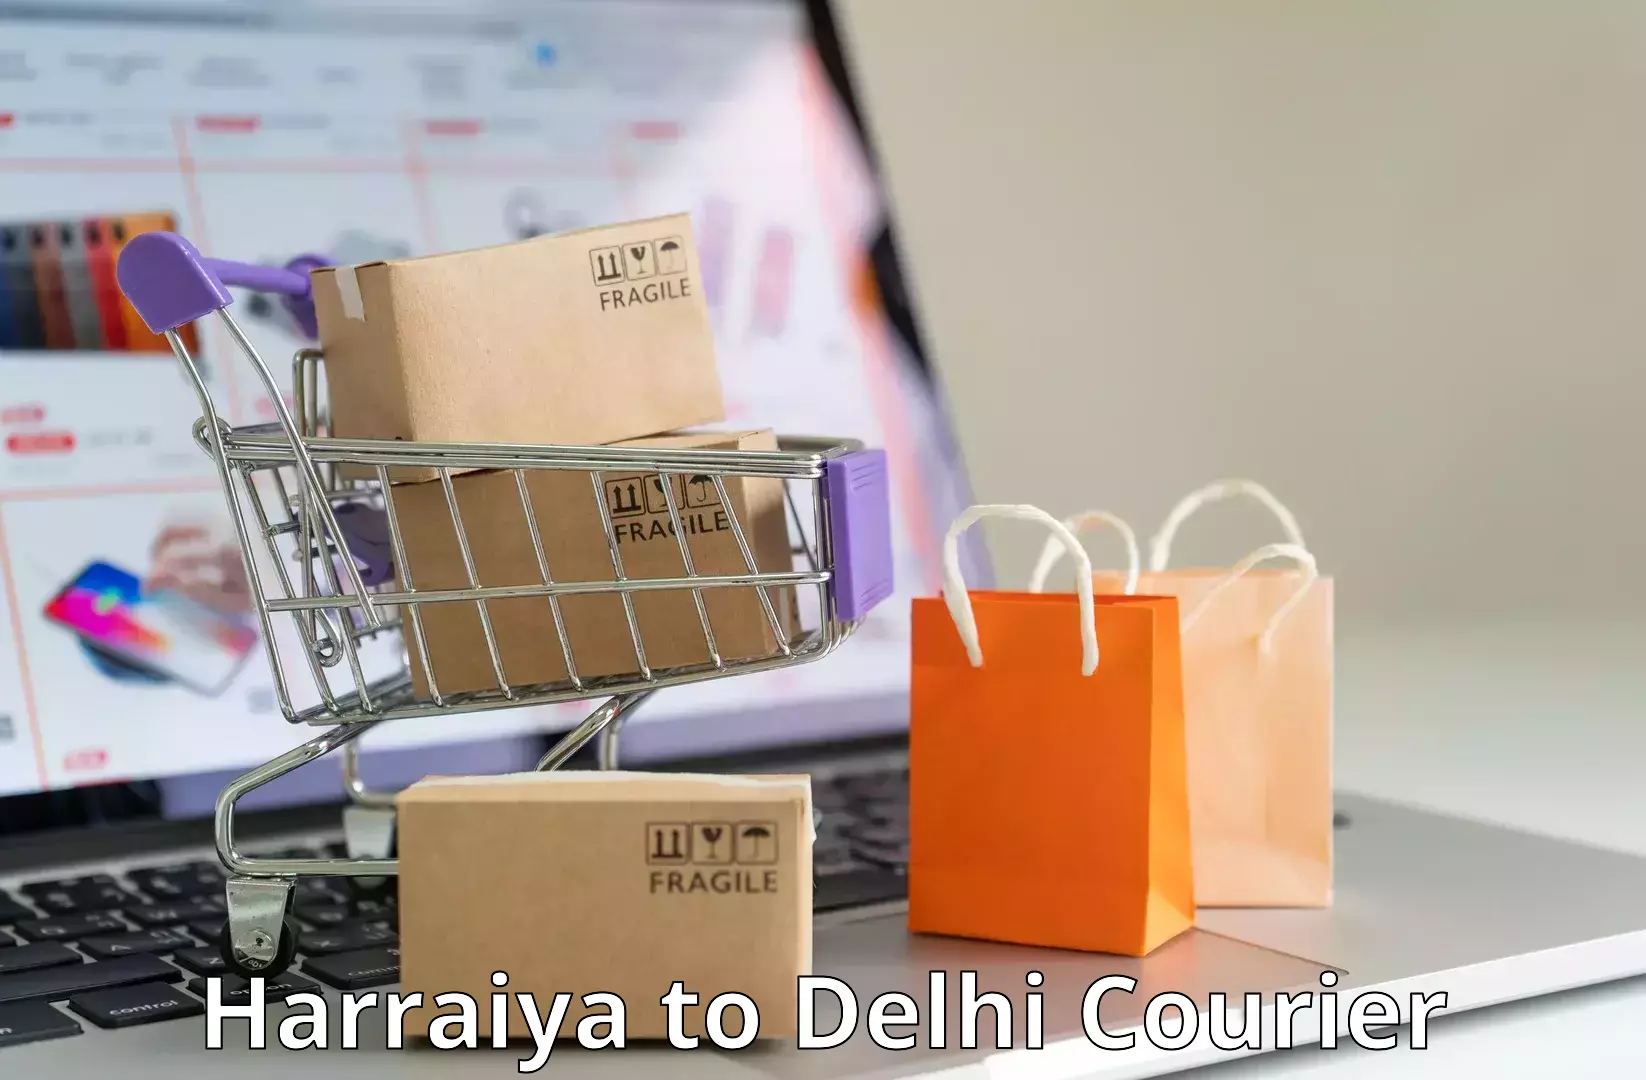 Sustainable courier practices Harraiya to Delhi